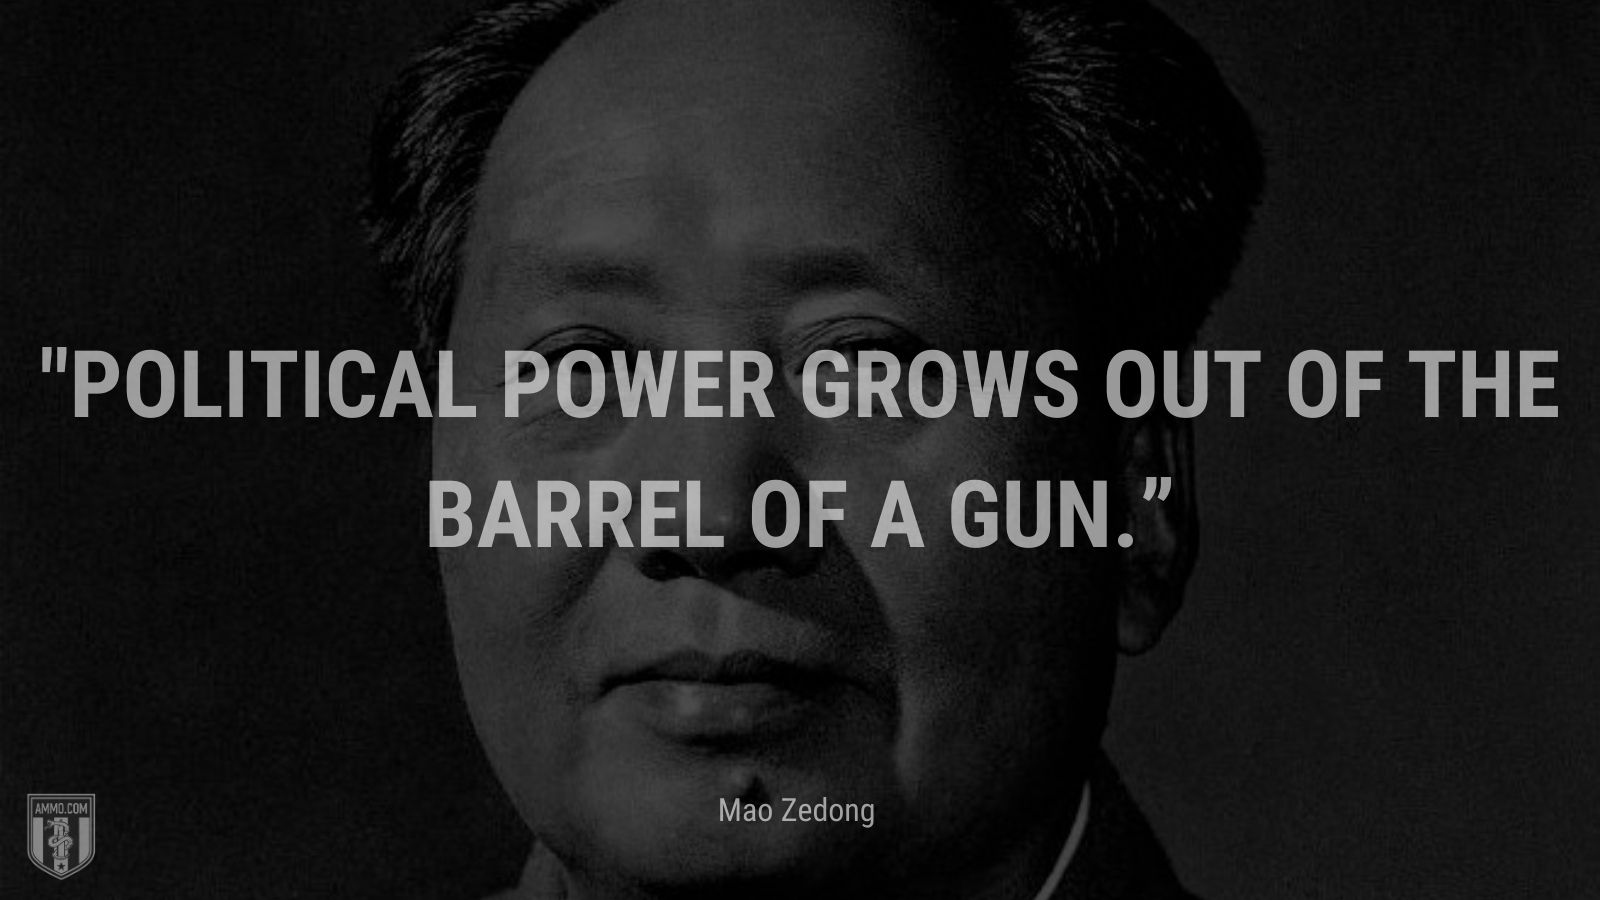 “Political power grows out of the barrel of a gun.” - Mao Zedong